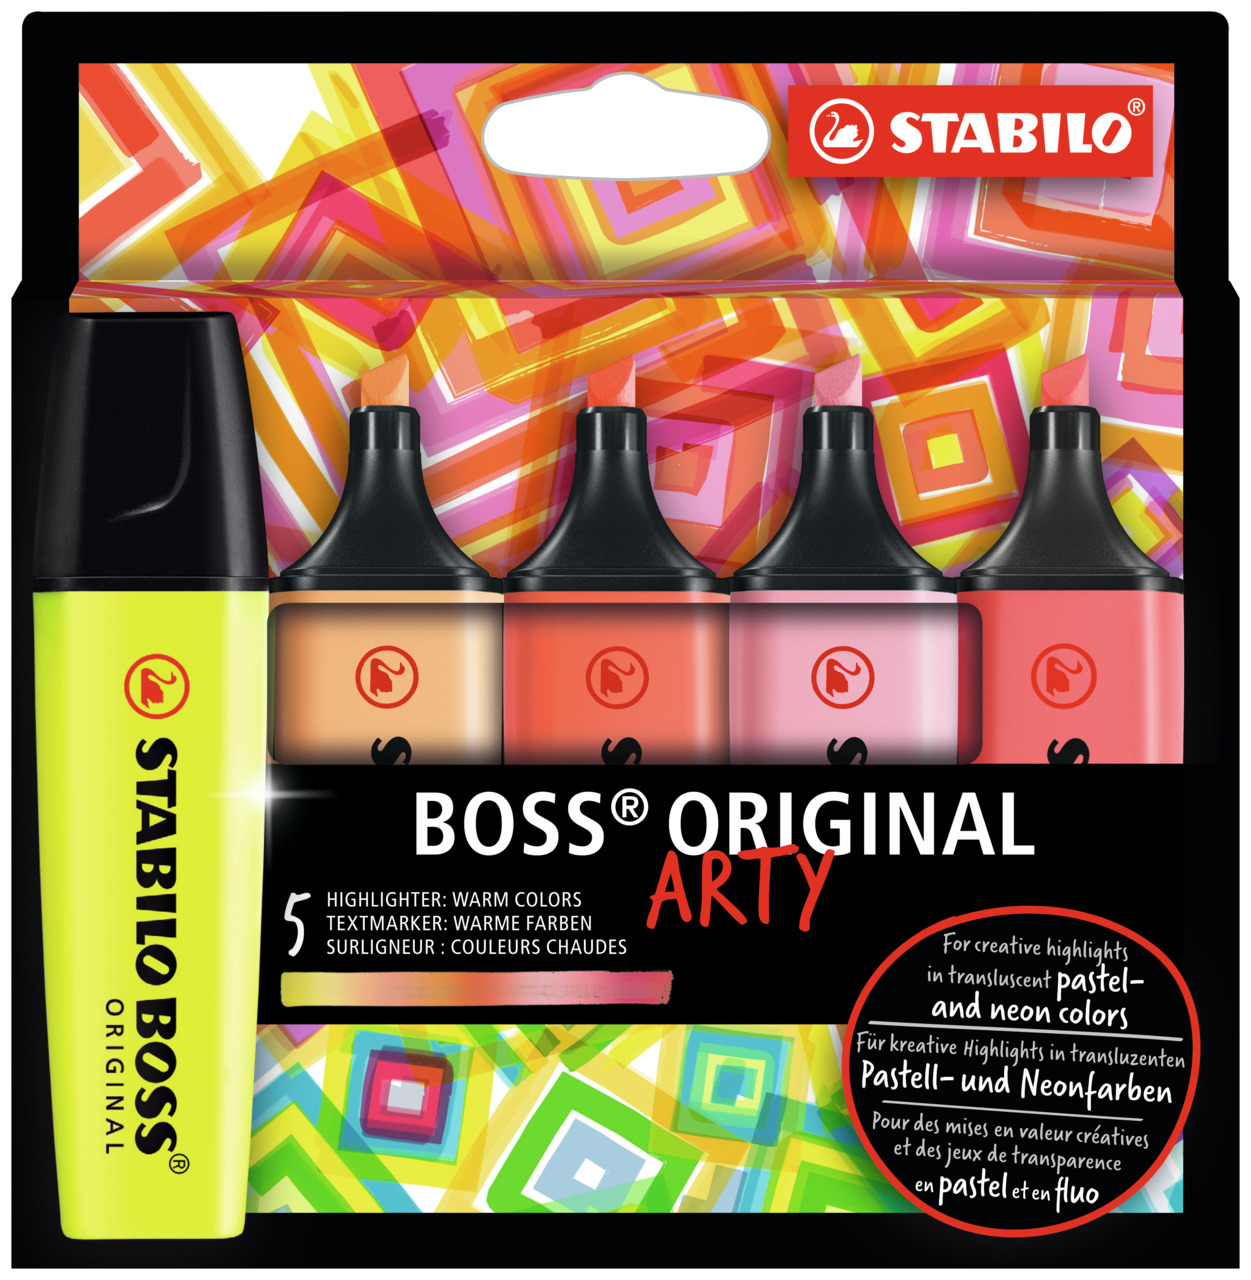 Stabilo - Highlighter Boss Original Ary - Warm Colors (5 pcs) (200991)